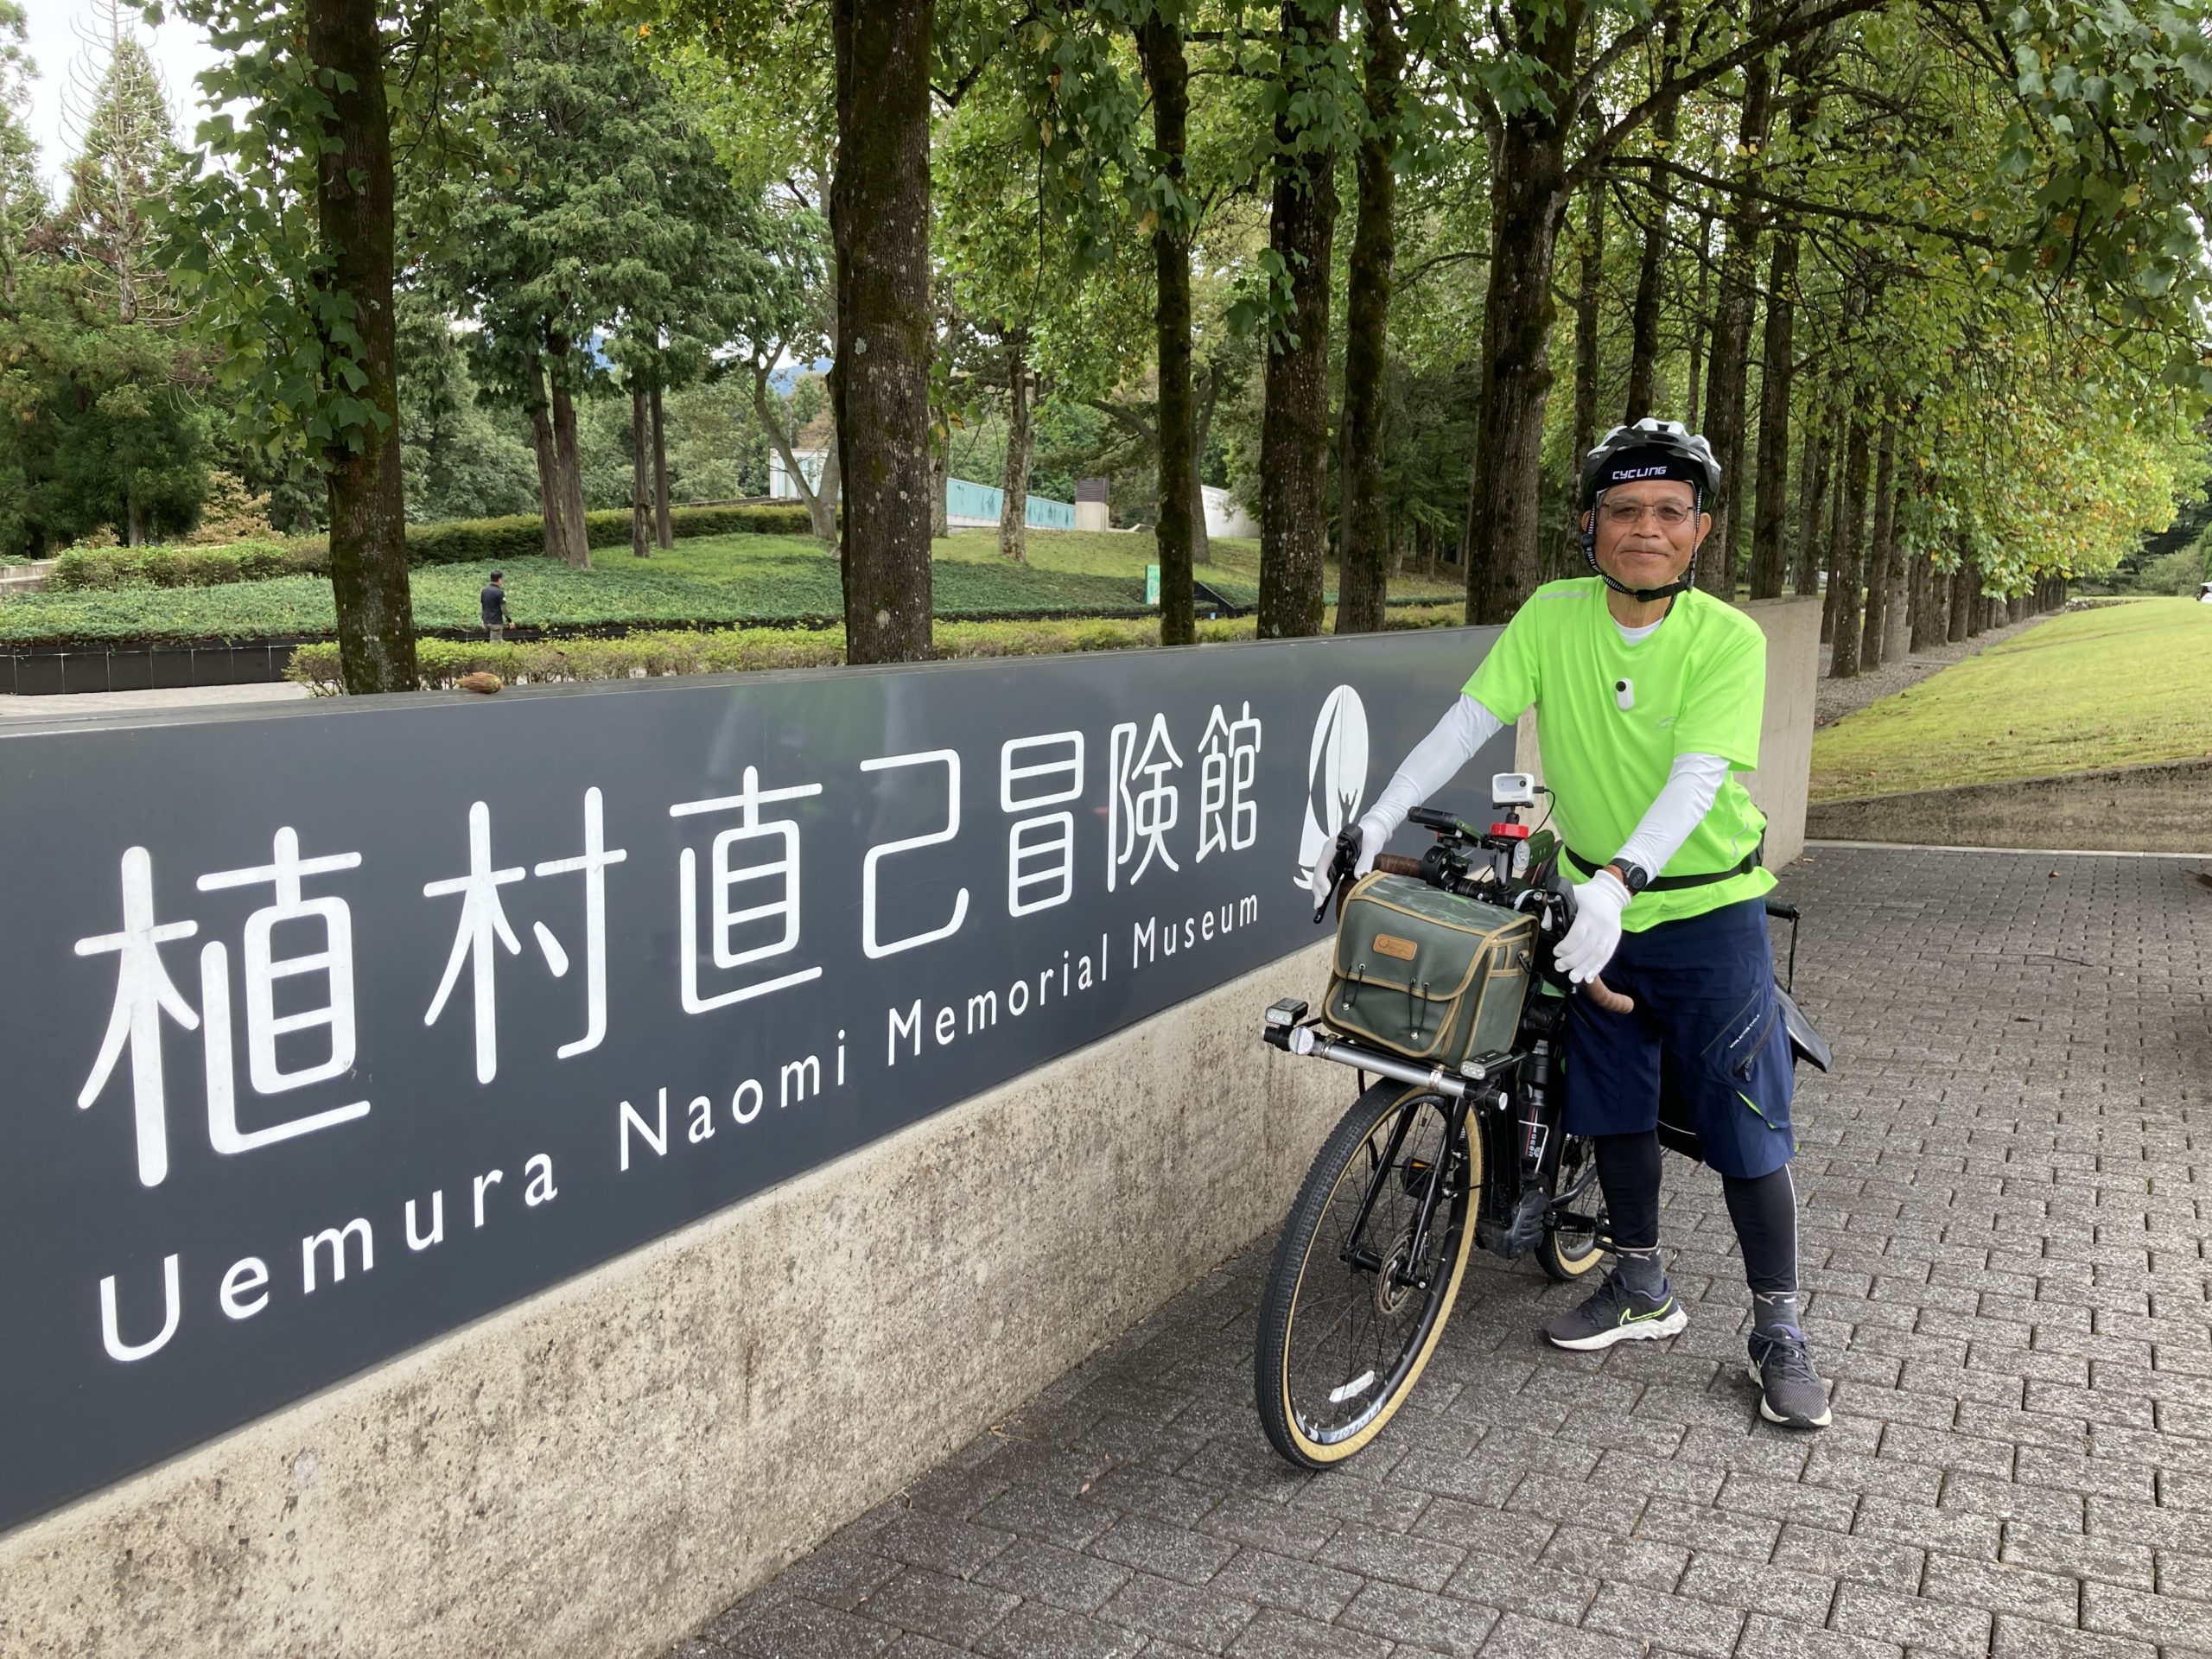 日本列島縦断自転車の旅